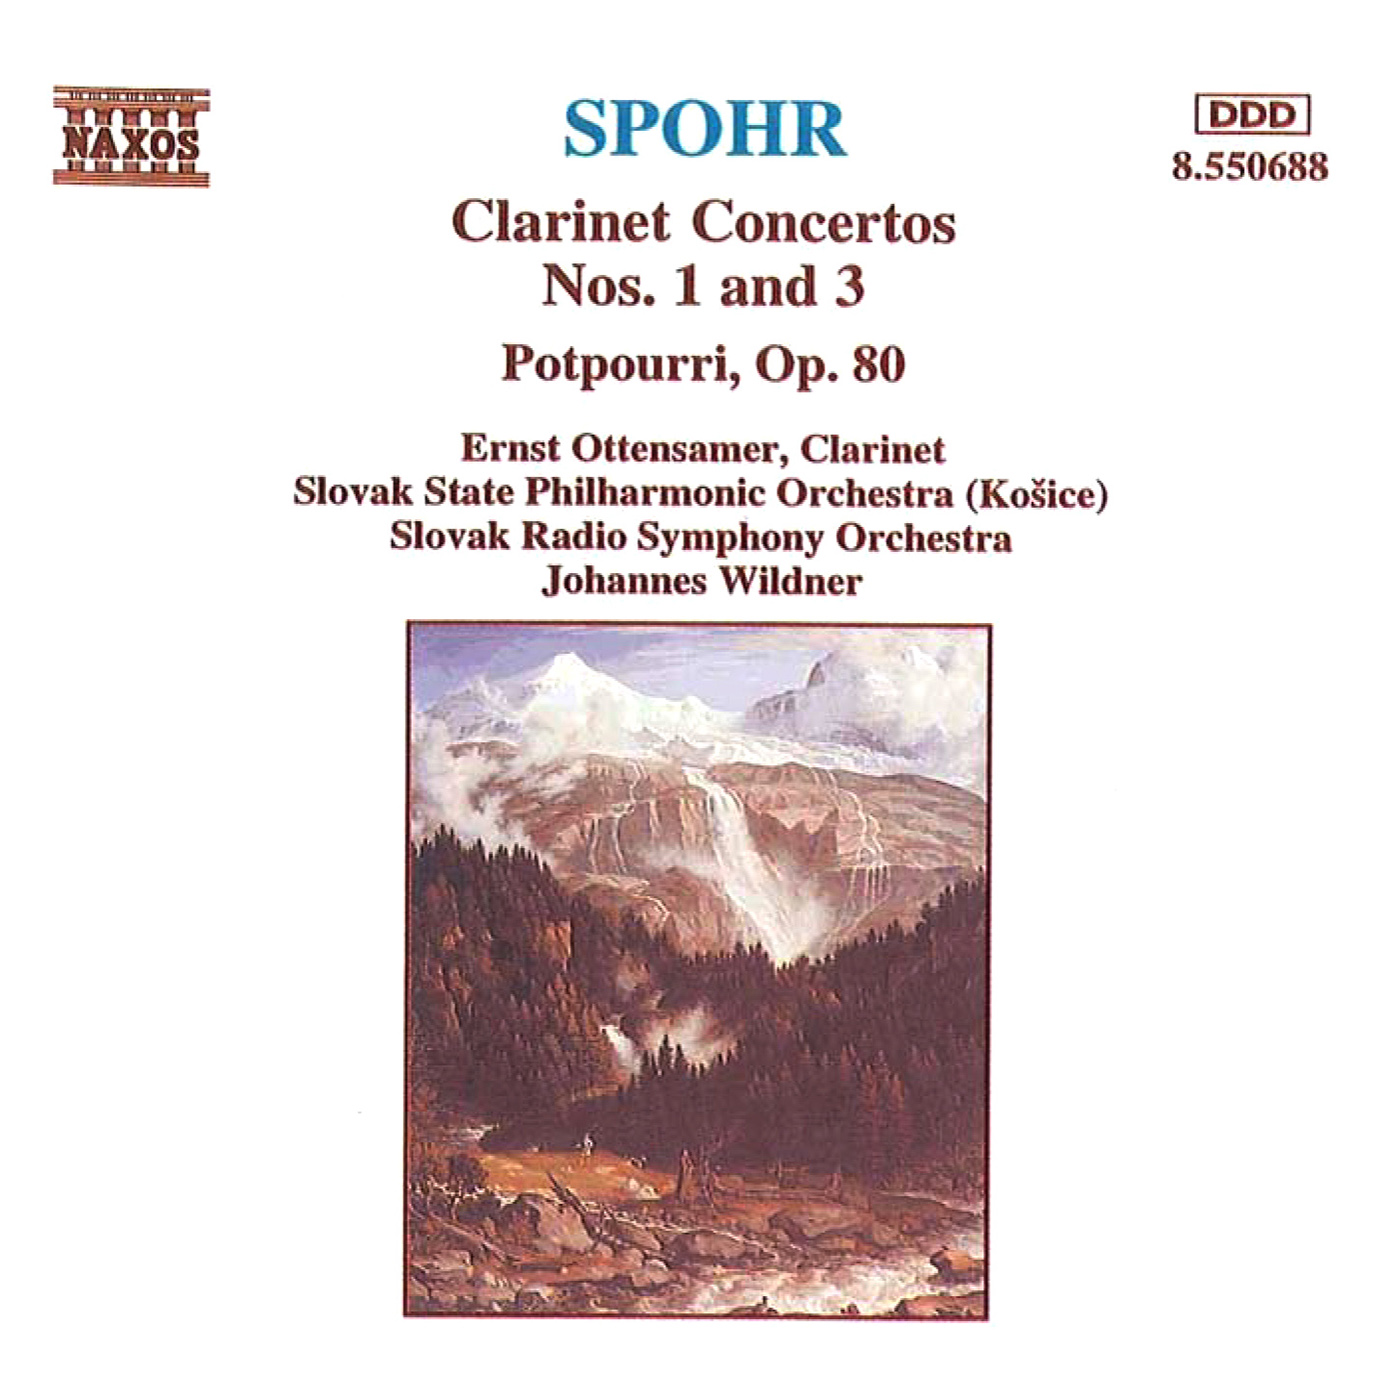 SPOHR: Clarinet Concertos Nos. 1 and 3 / Potpourri, Op. 80